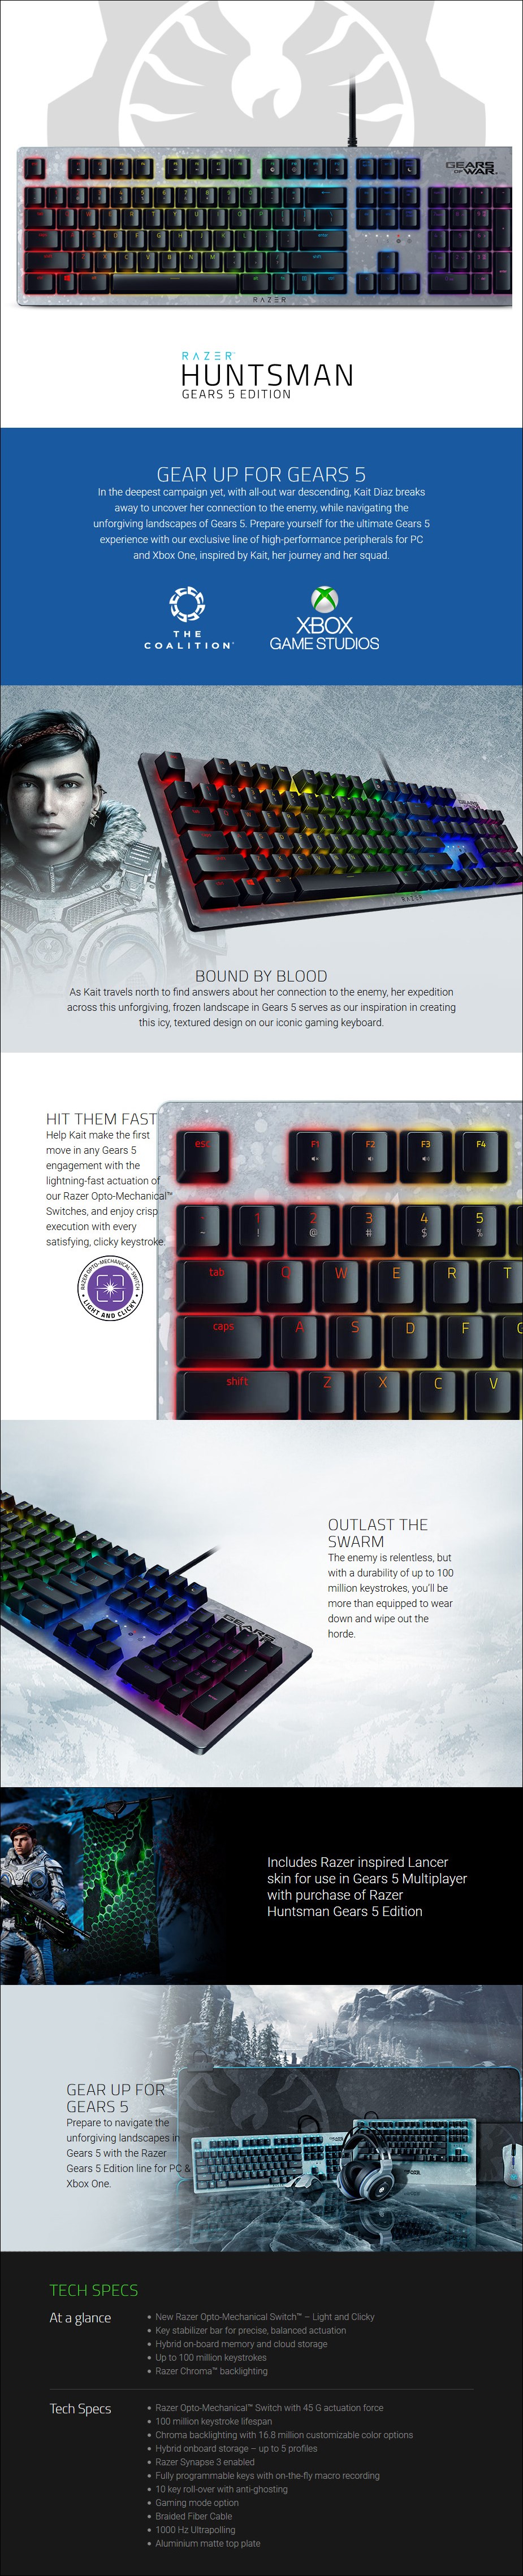 Razer Huntsman Elite Opto-Mechanical Gaming Keyboard - Gears 5 Edition - Overview 1